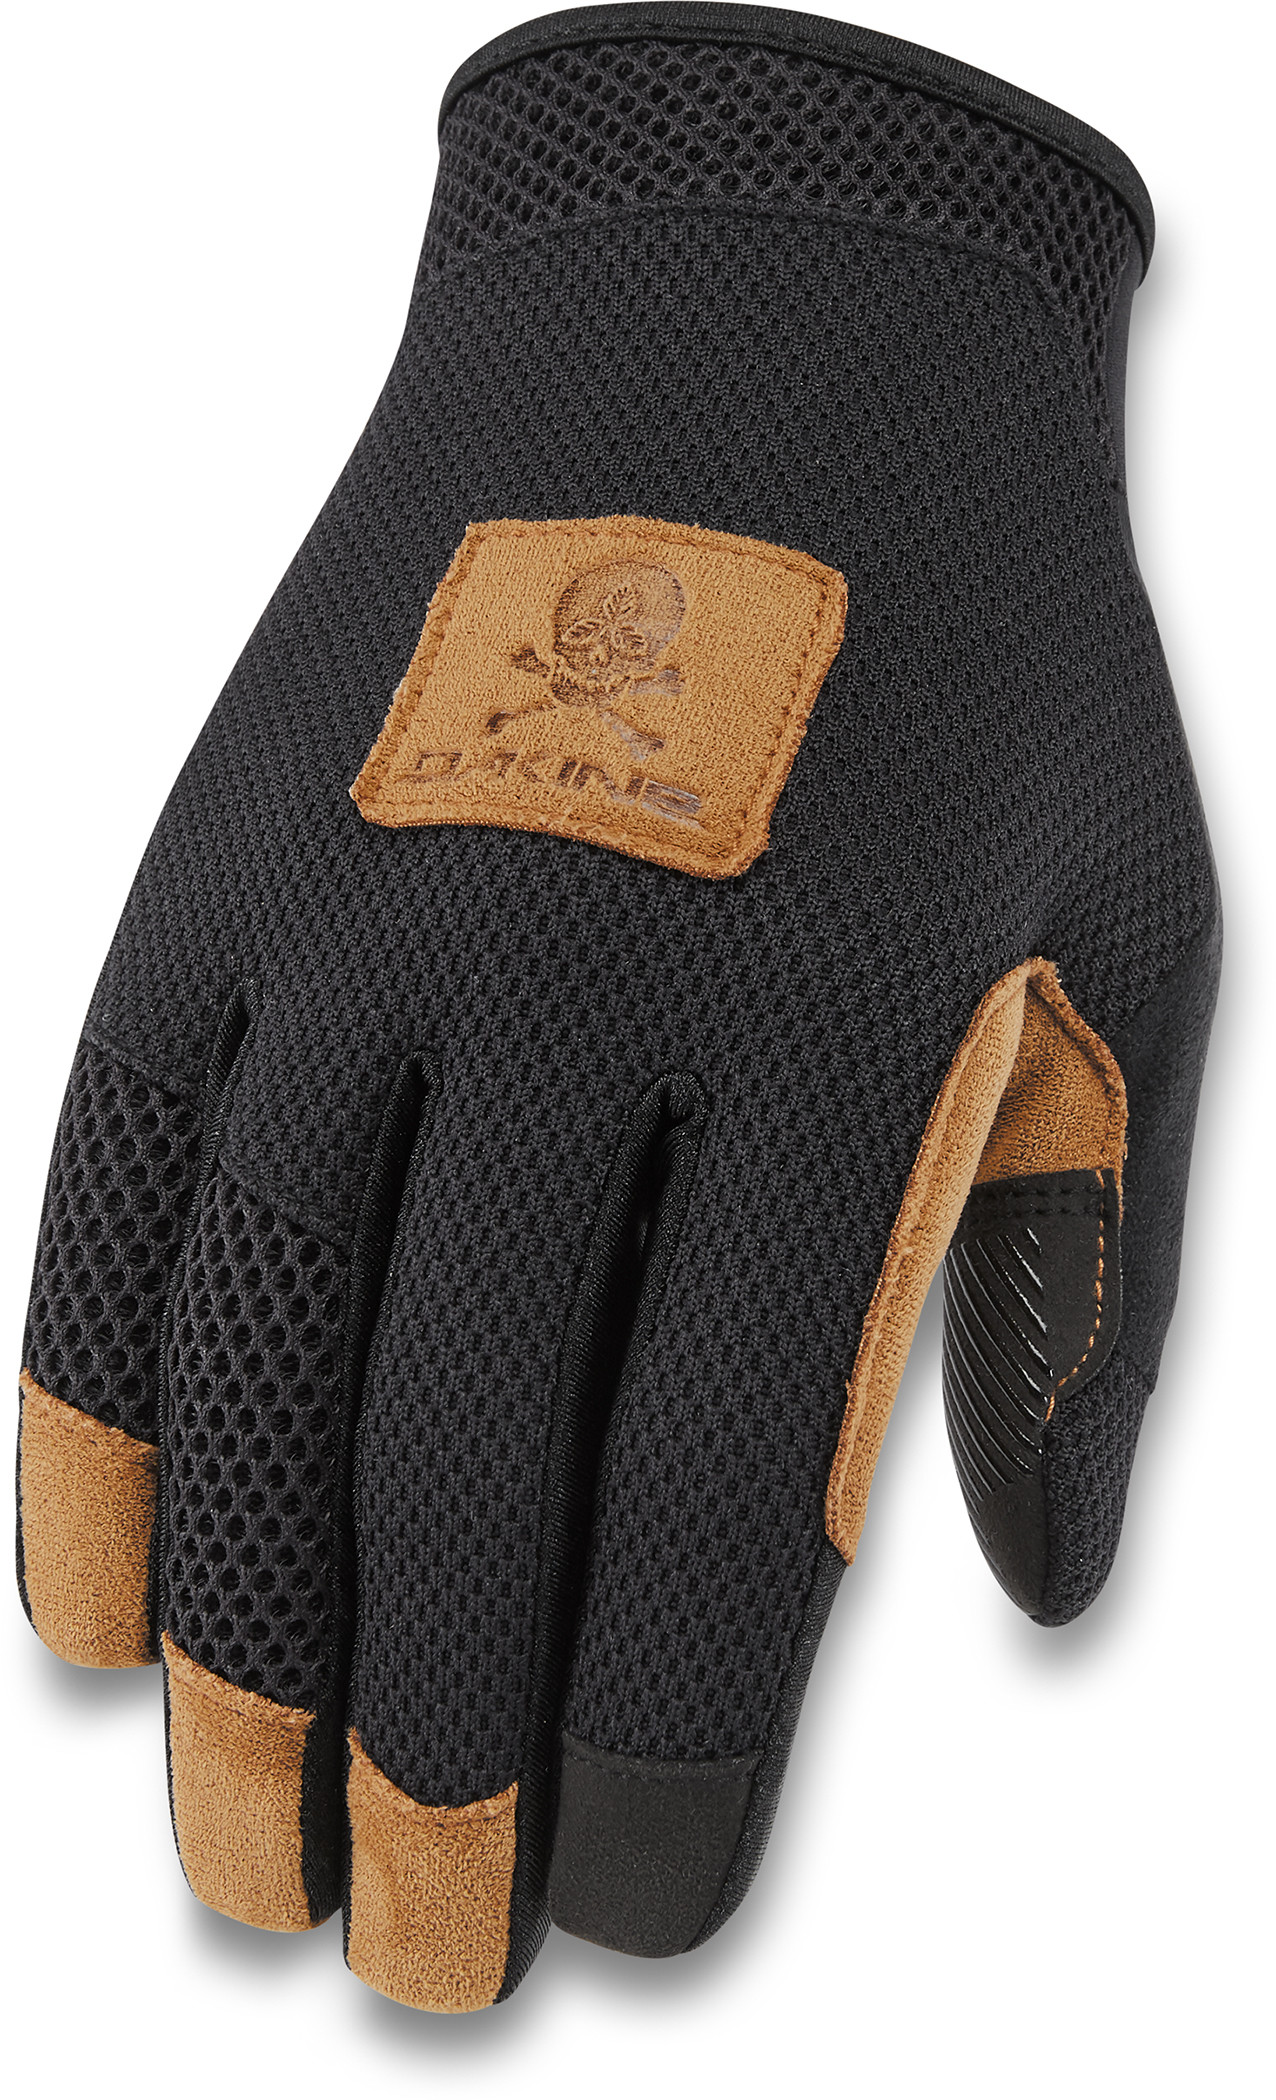 Covert Bike Glove